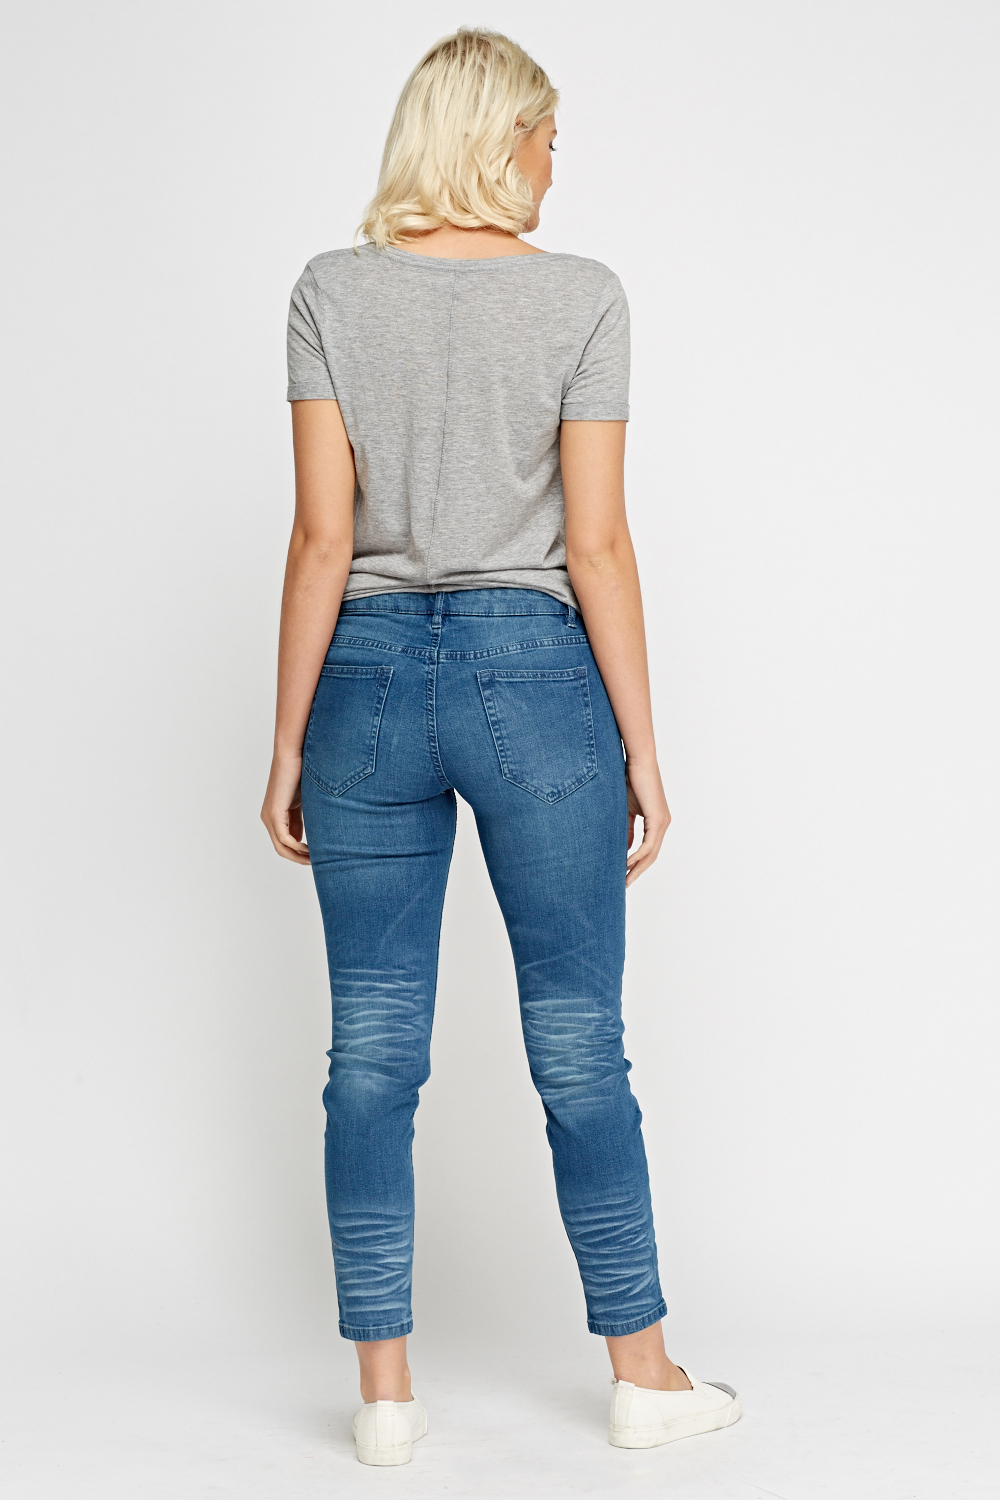 Star Print Skinny Denim Jeans - Just $7